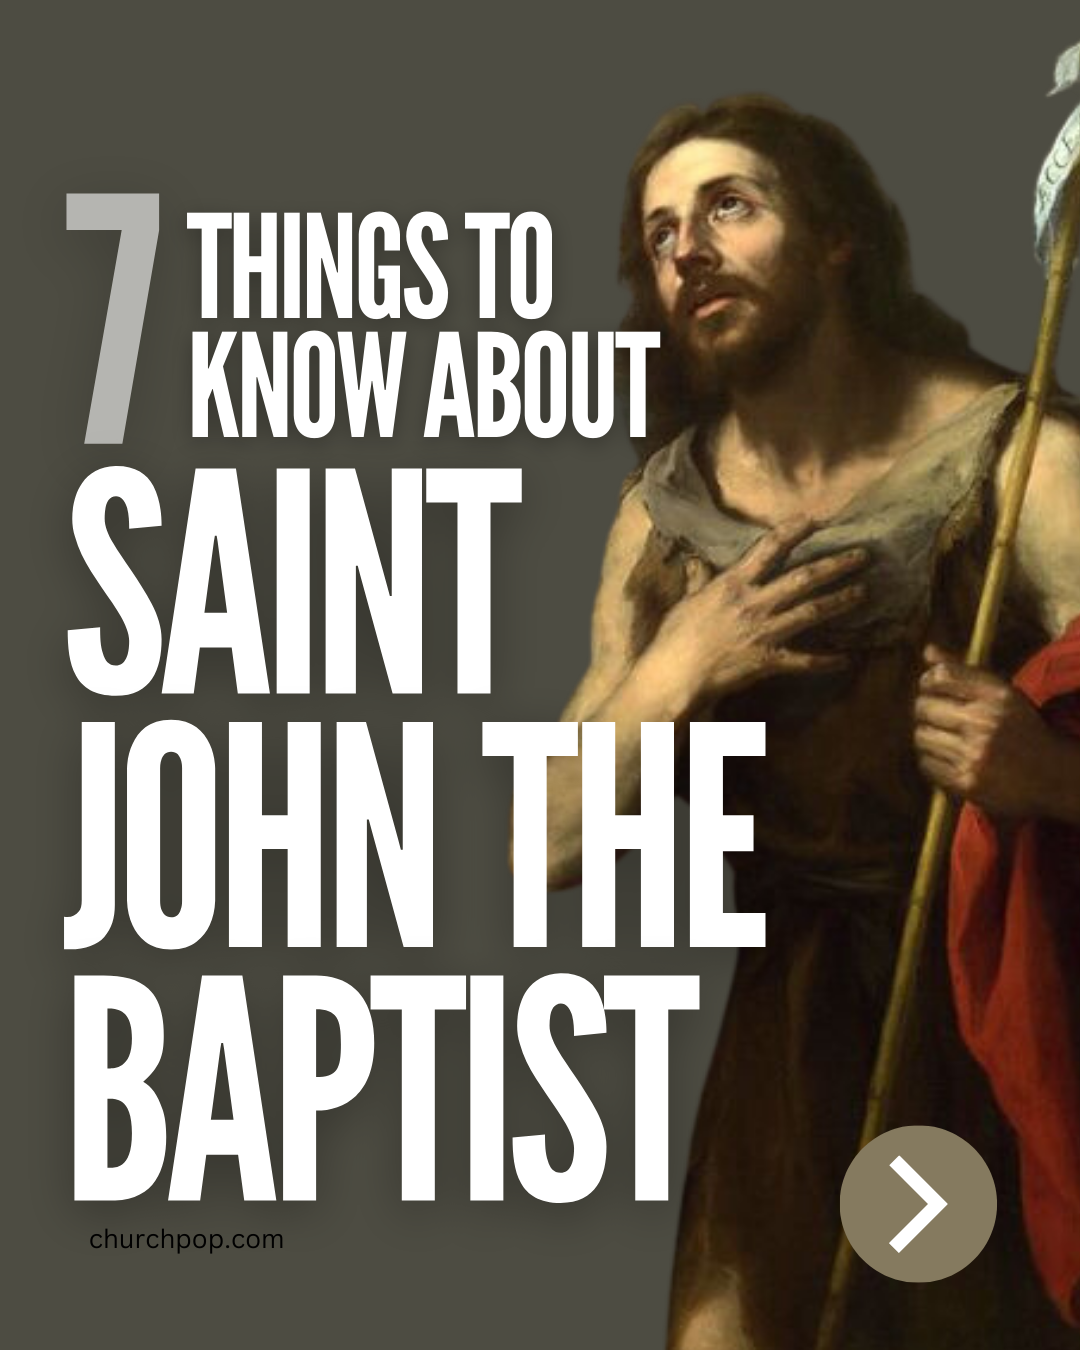 Who is John the Baptist?